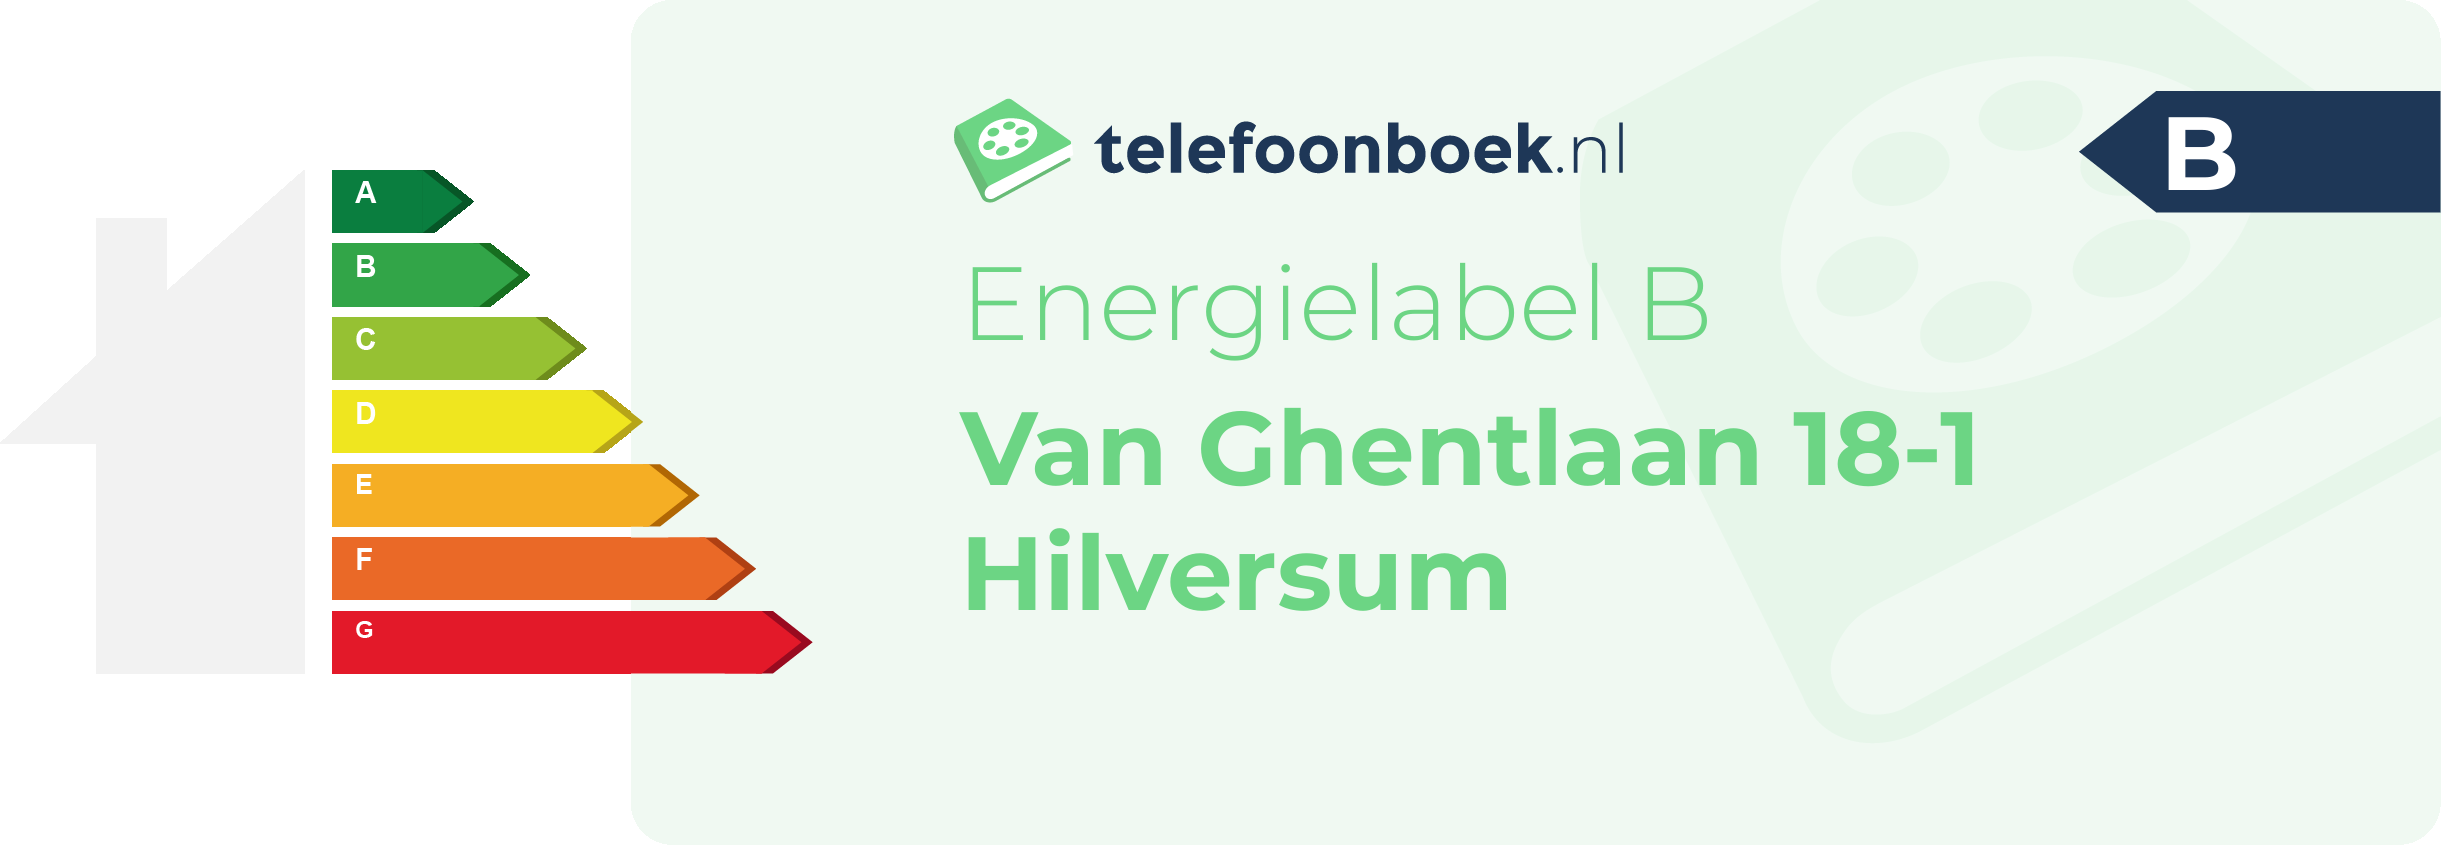 Energielabel Van Ghentlaan 18-1 Hilversum